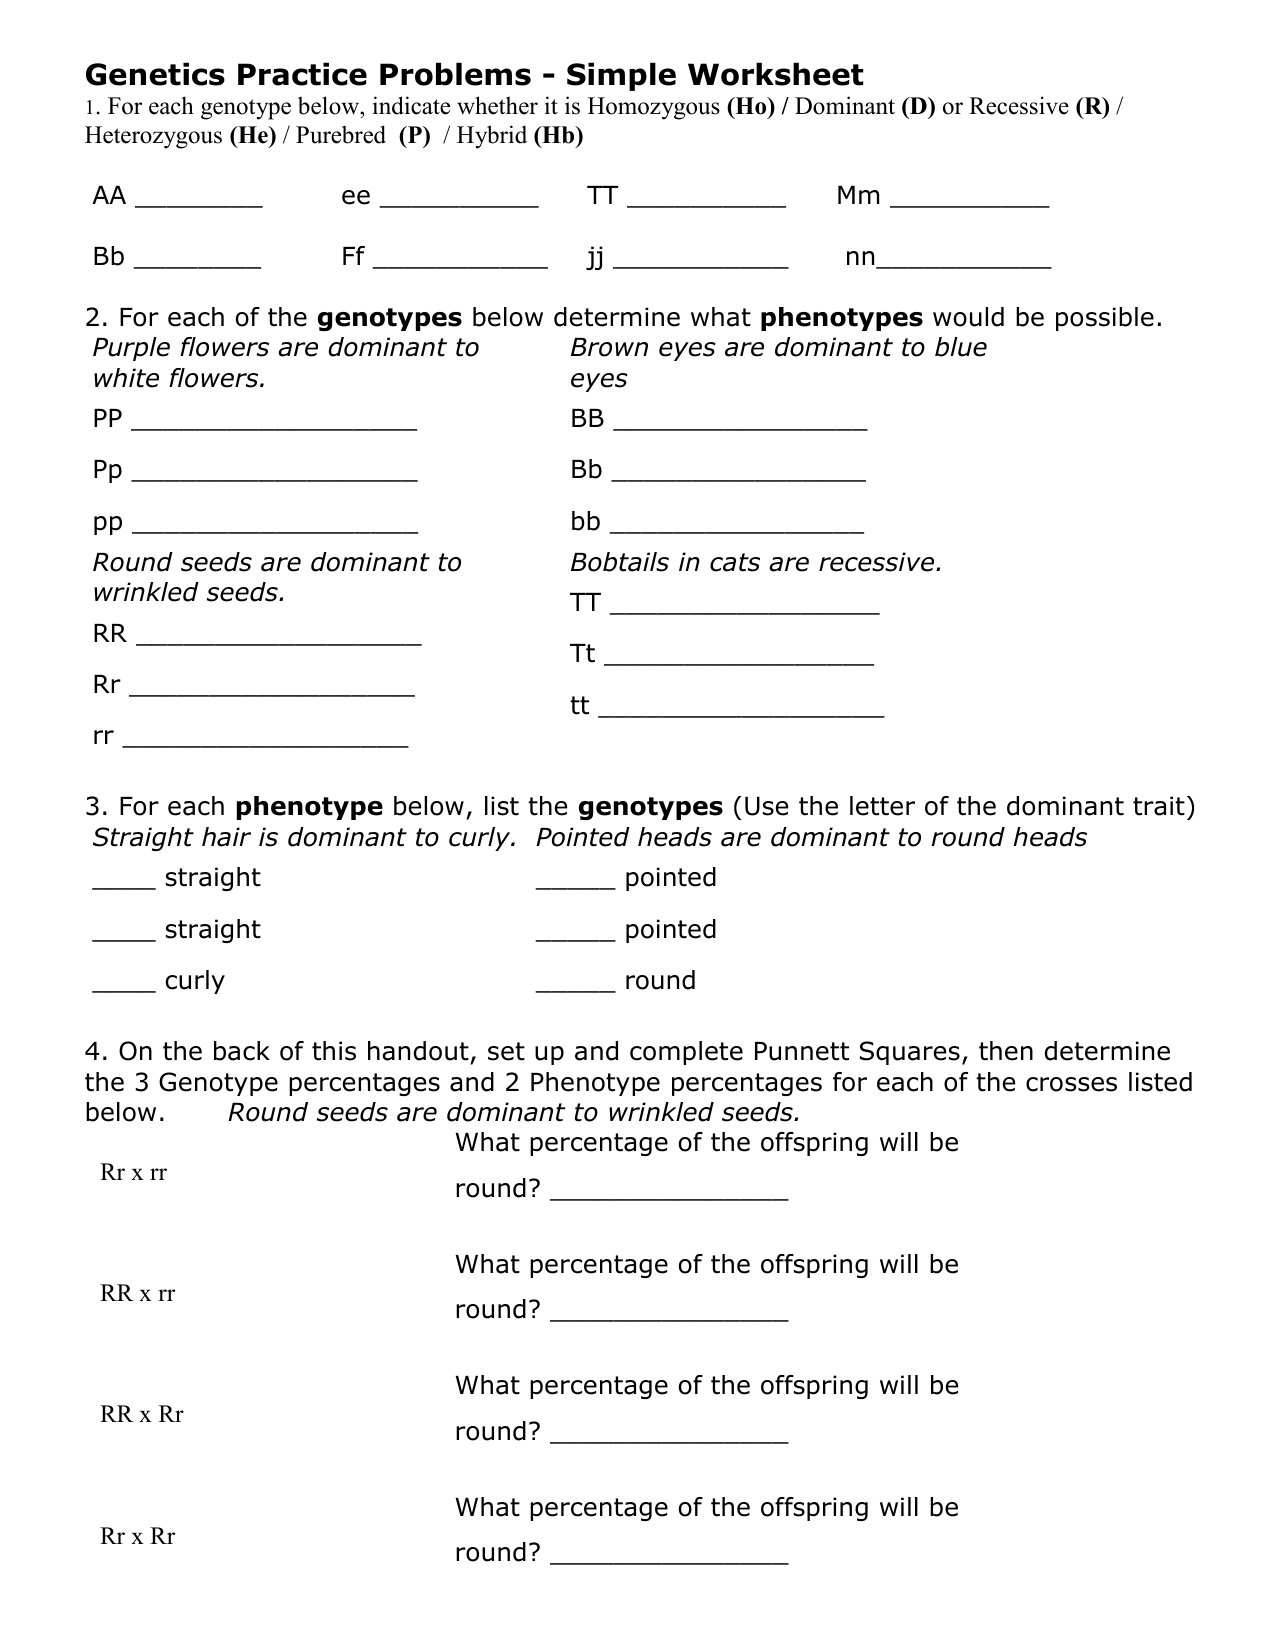 Genetics Practice Problems - Simple Worksheet Within Genetics Practice Problems Worksheet Answers